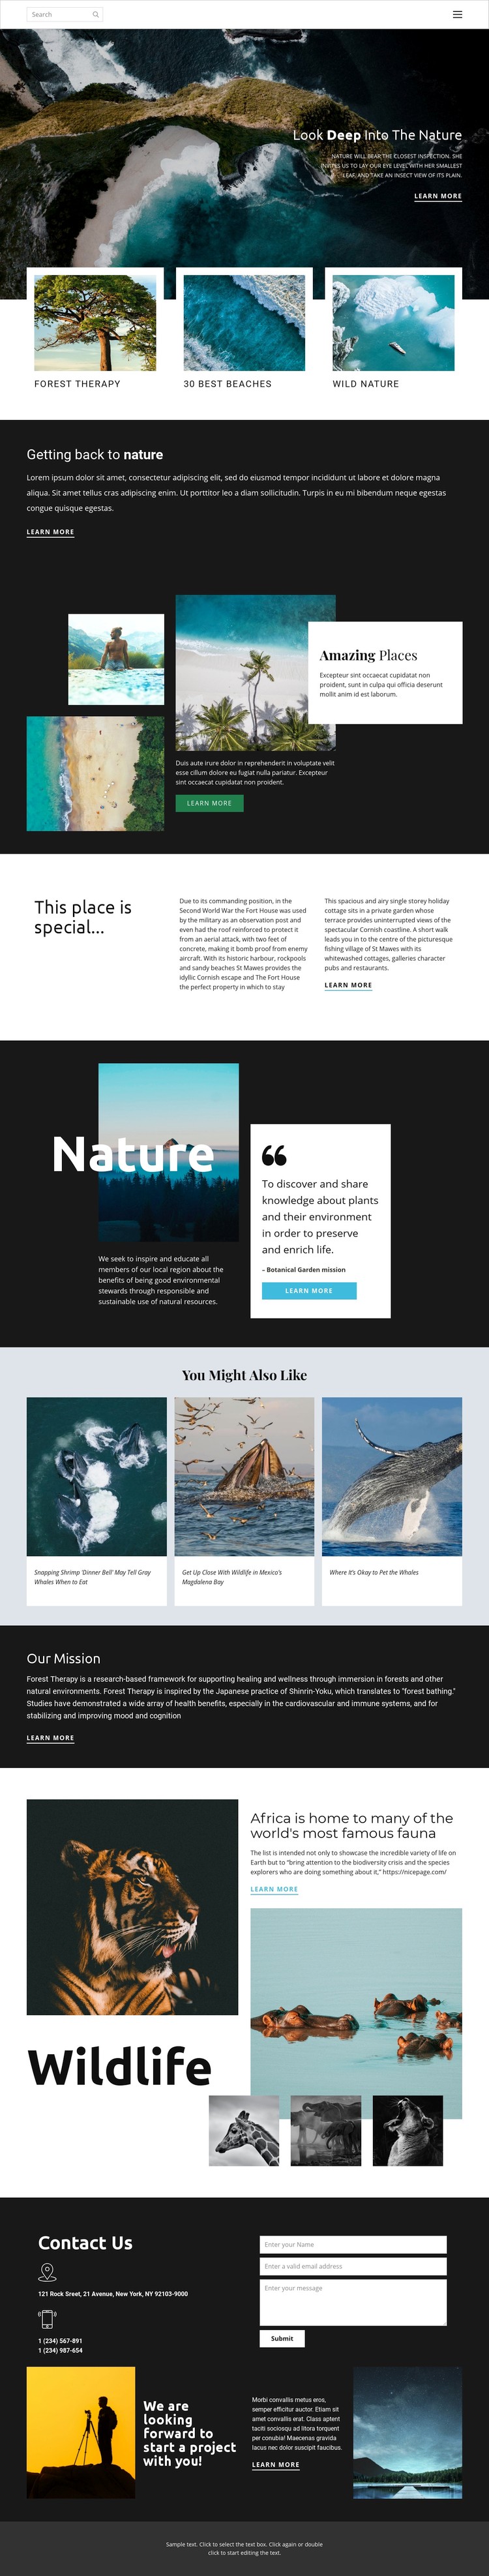 Exploring wildlife and nature Webflow Template Alternative